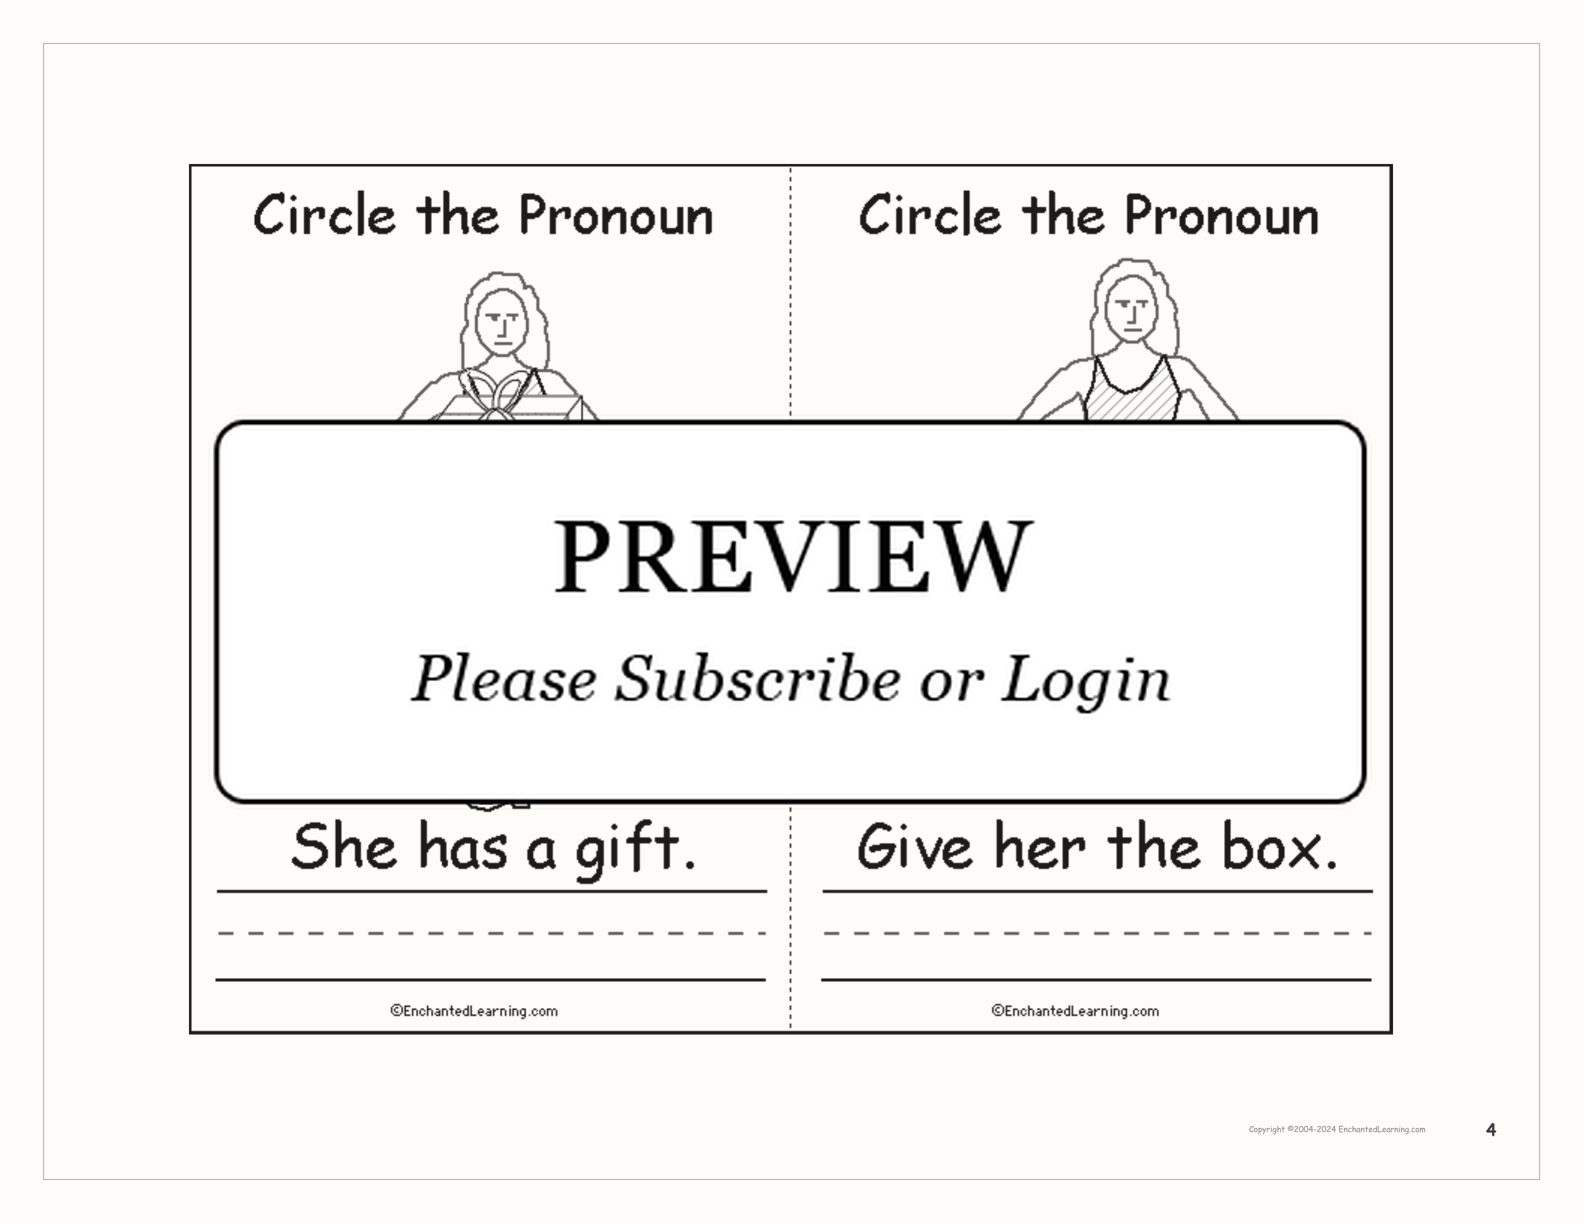 Circle the Pronouns Book interactive printout page 4